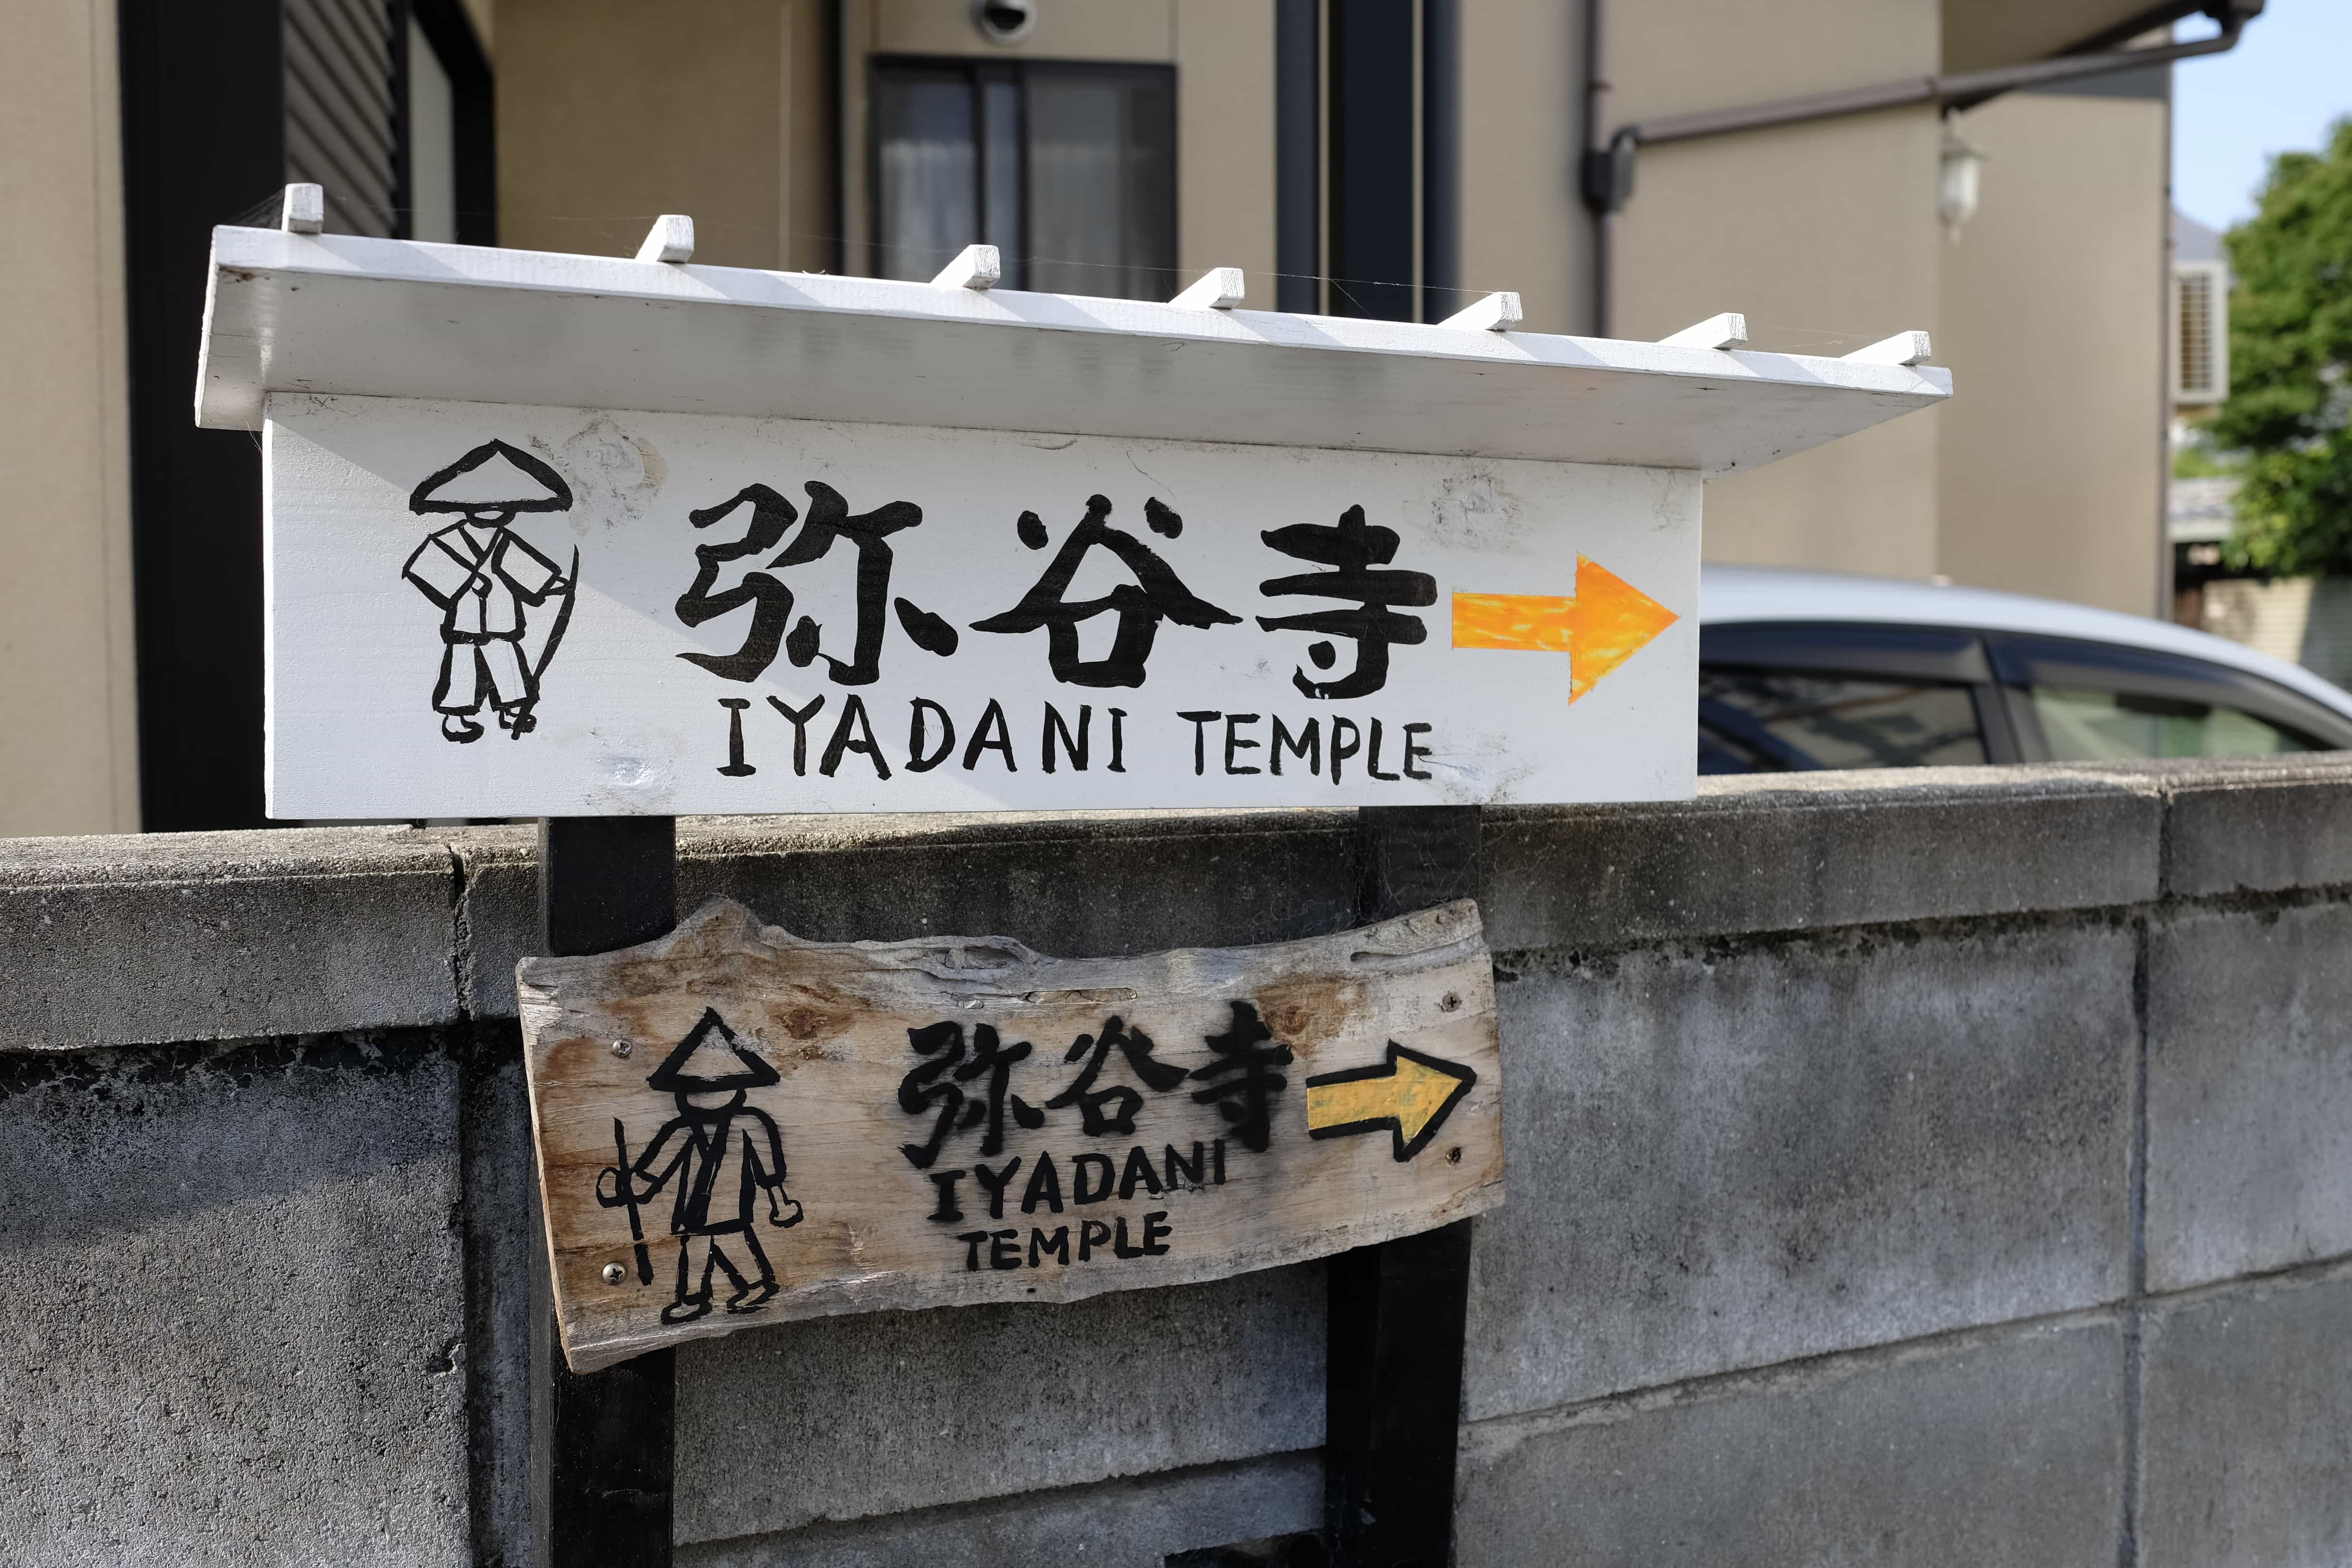 Sign to Iyadani temple